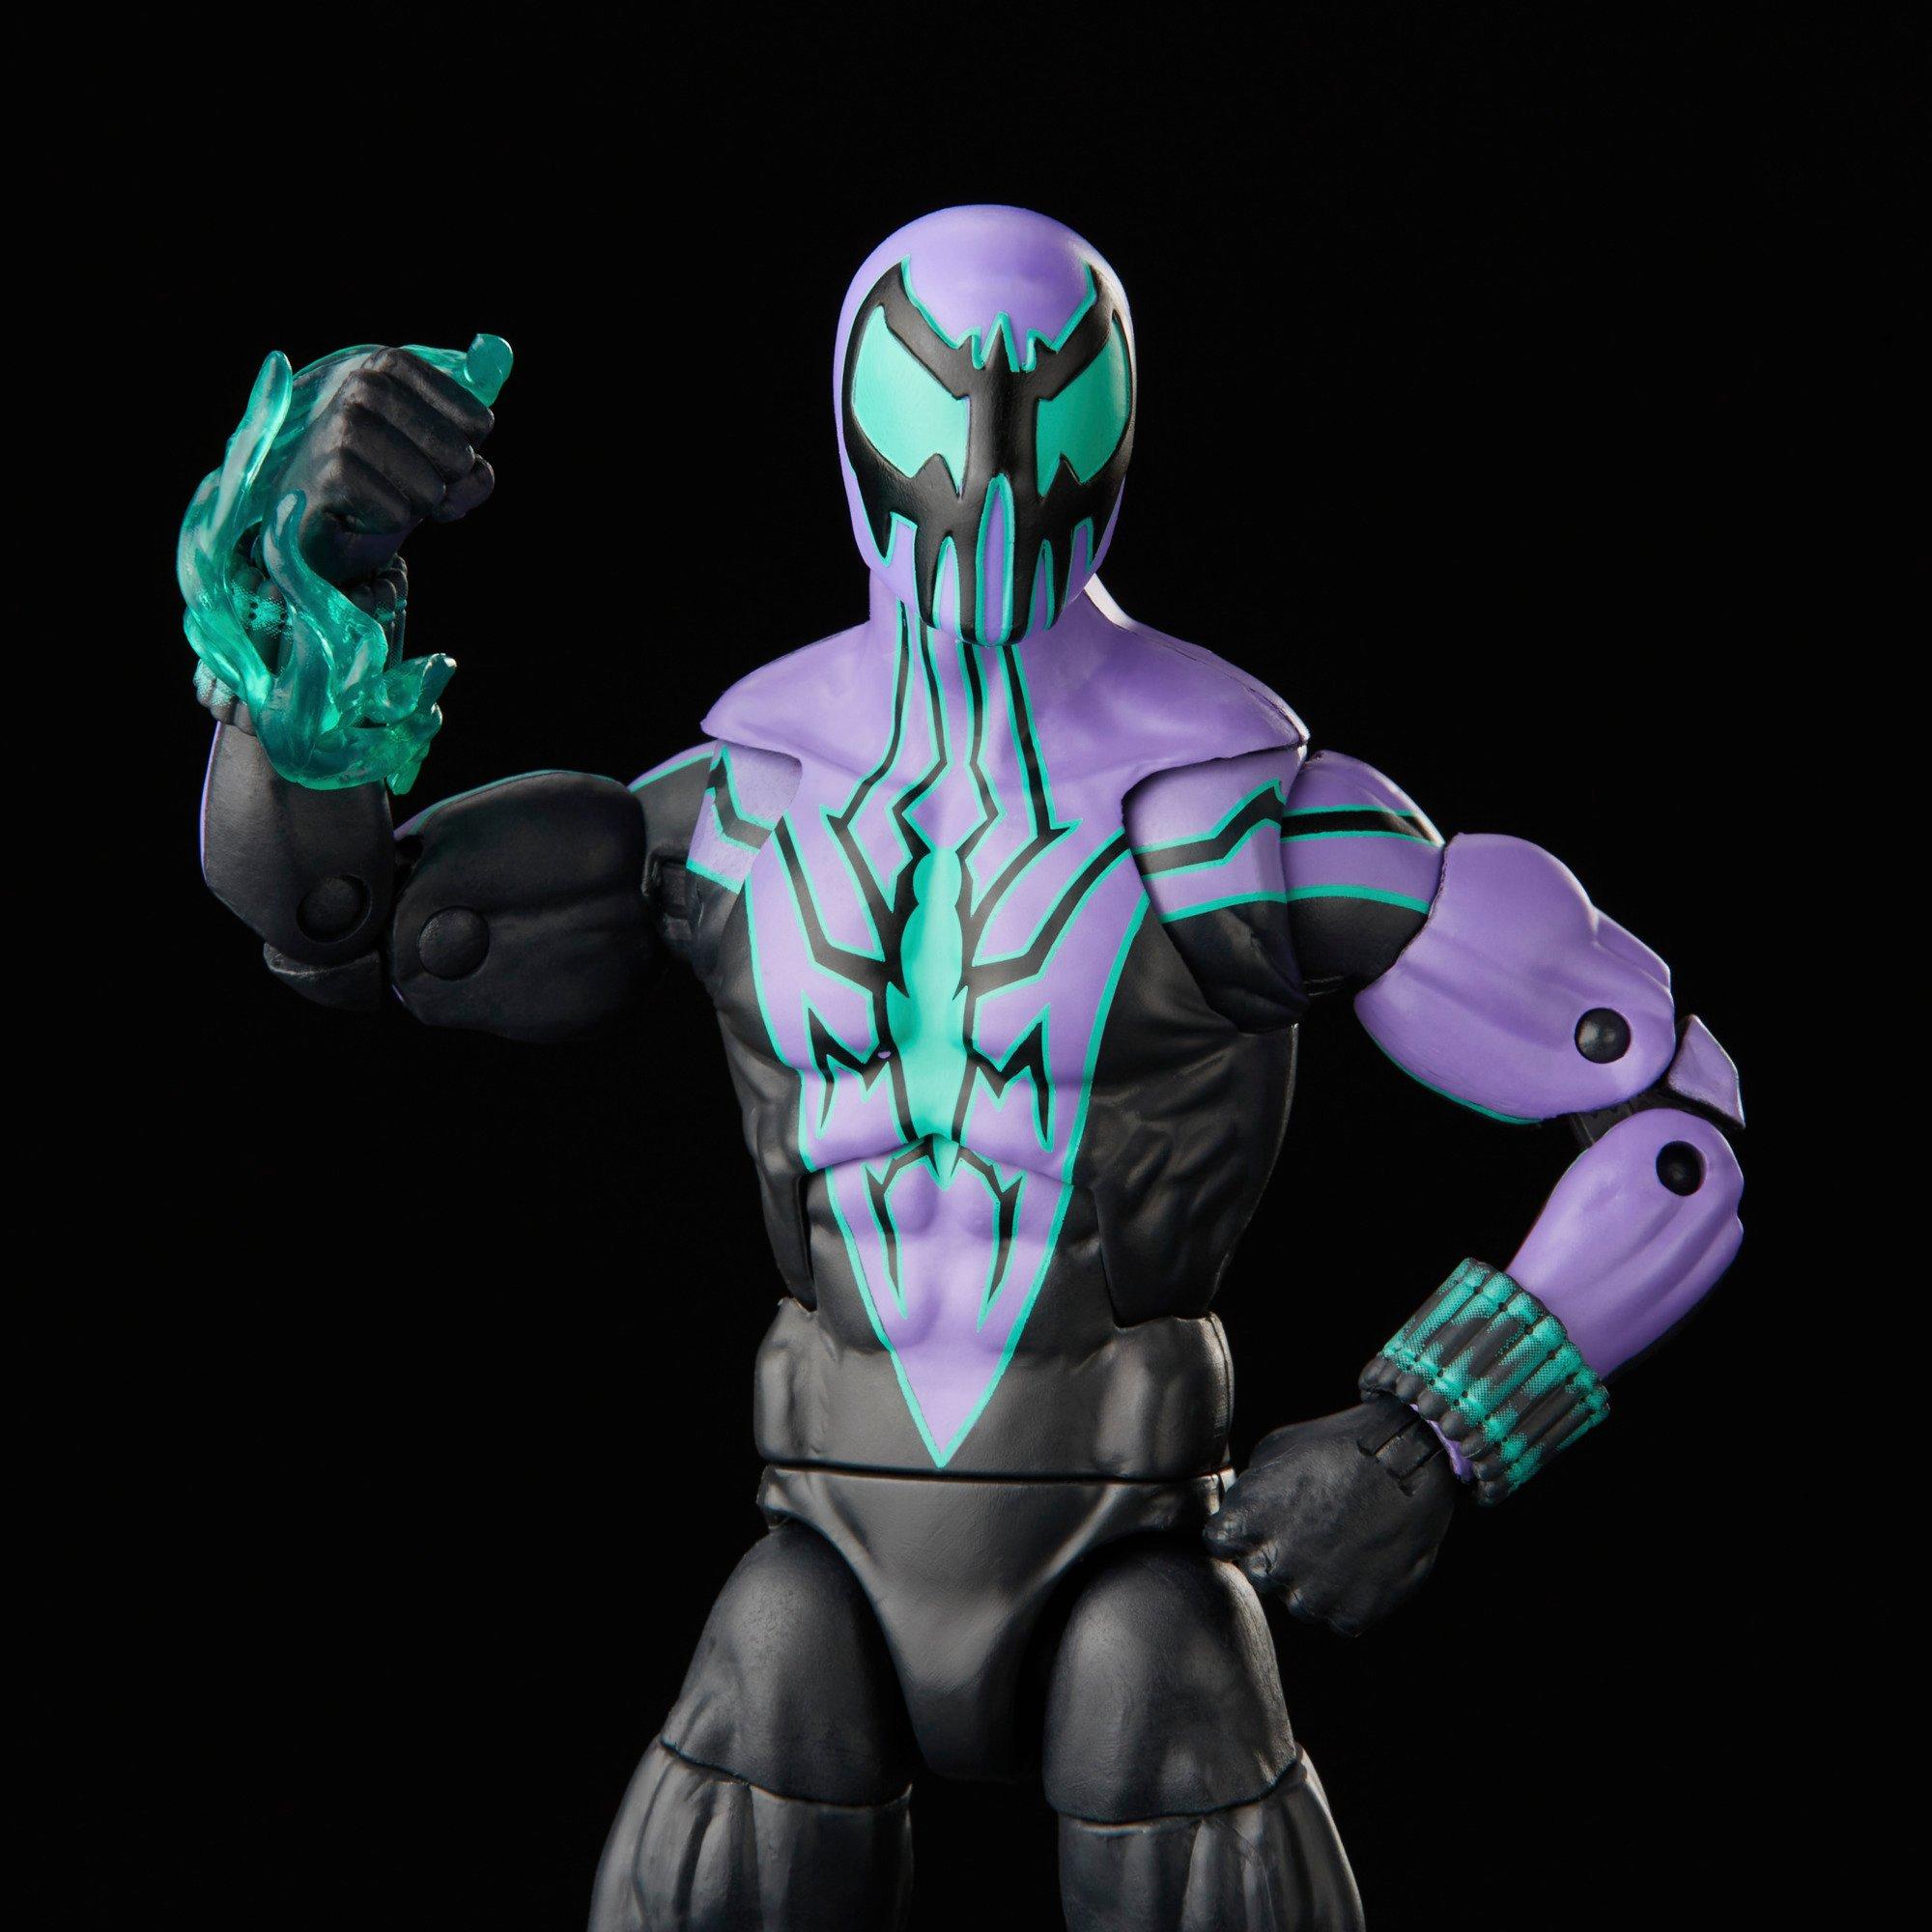 big time spider man action figure